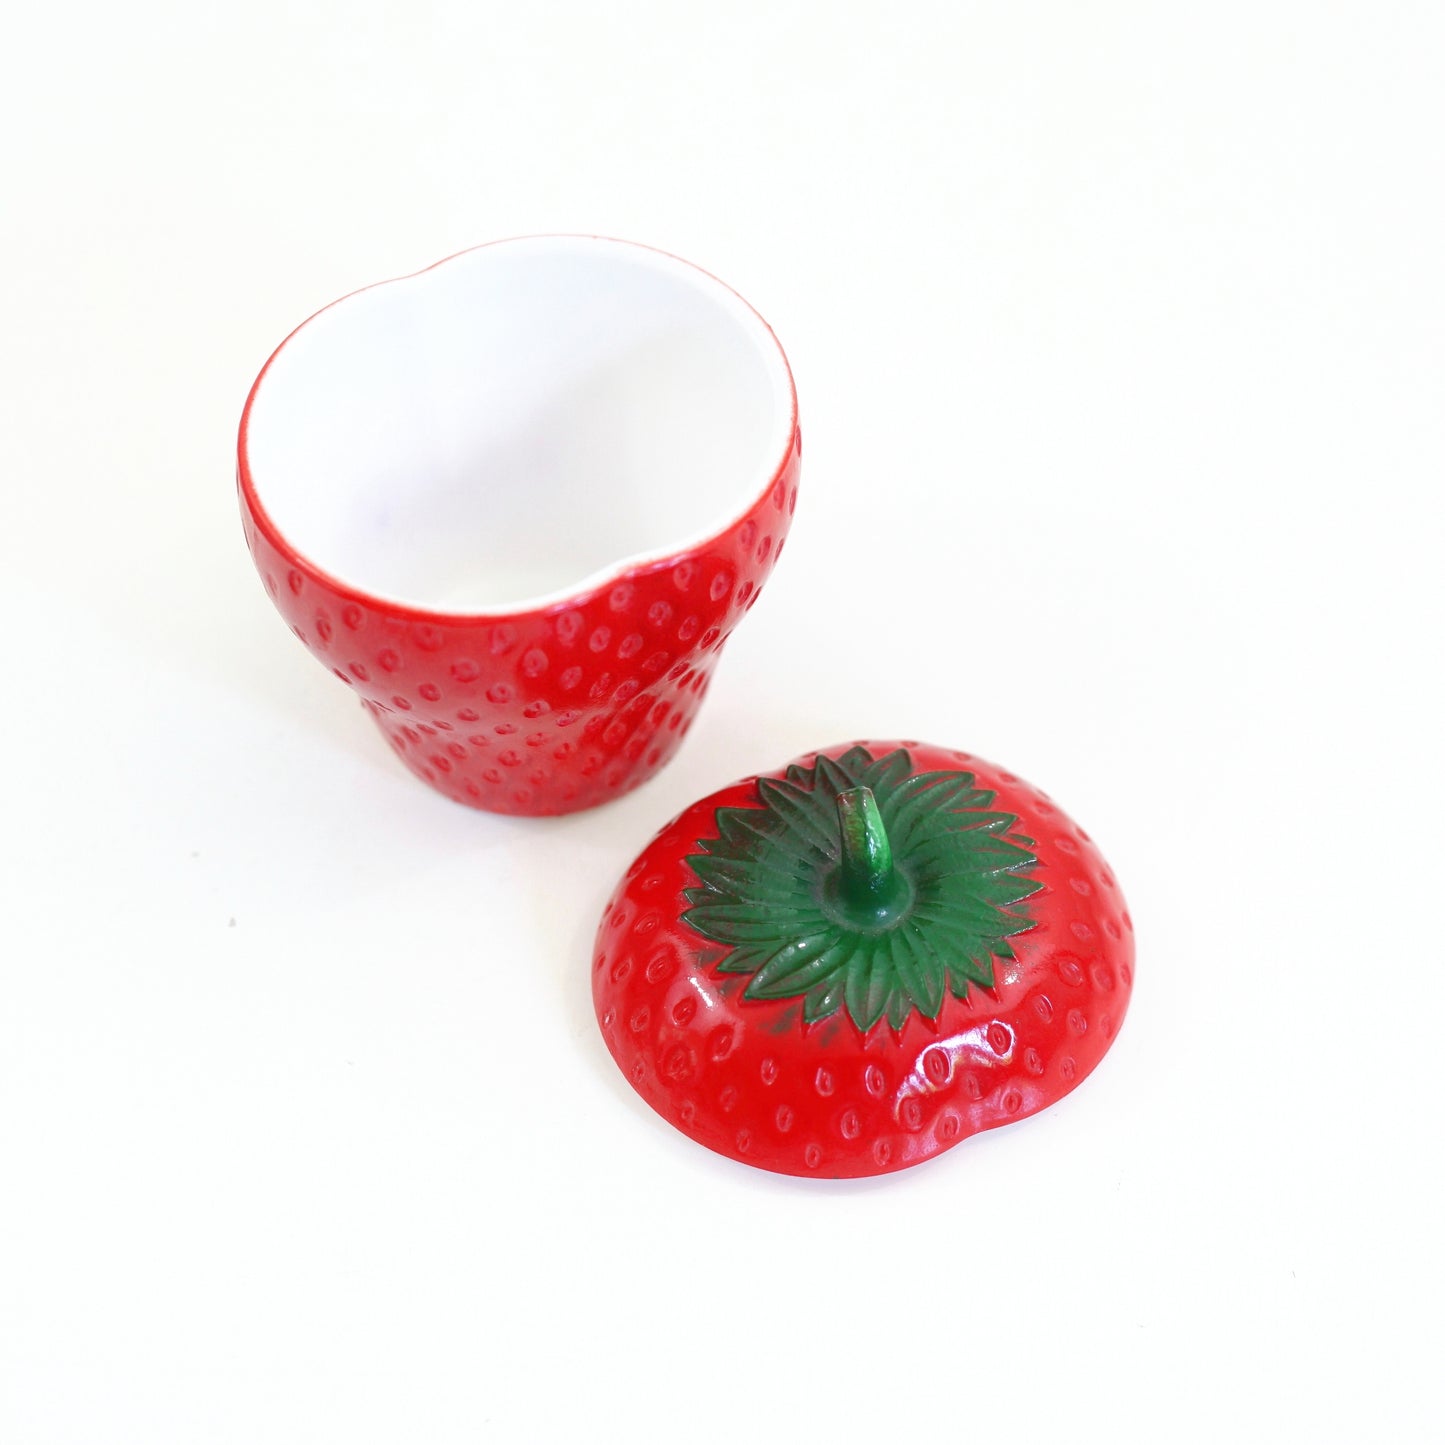 SOLD - Vintage 1950s Strawberry Milk Glass Jar